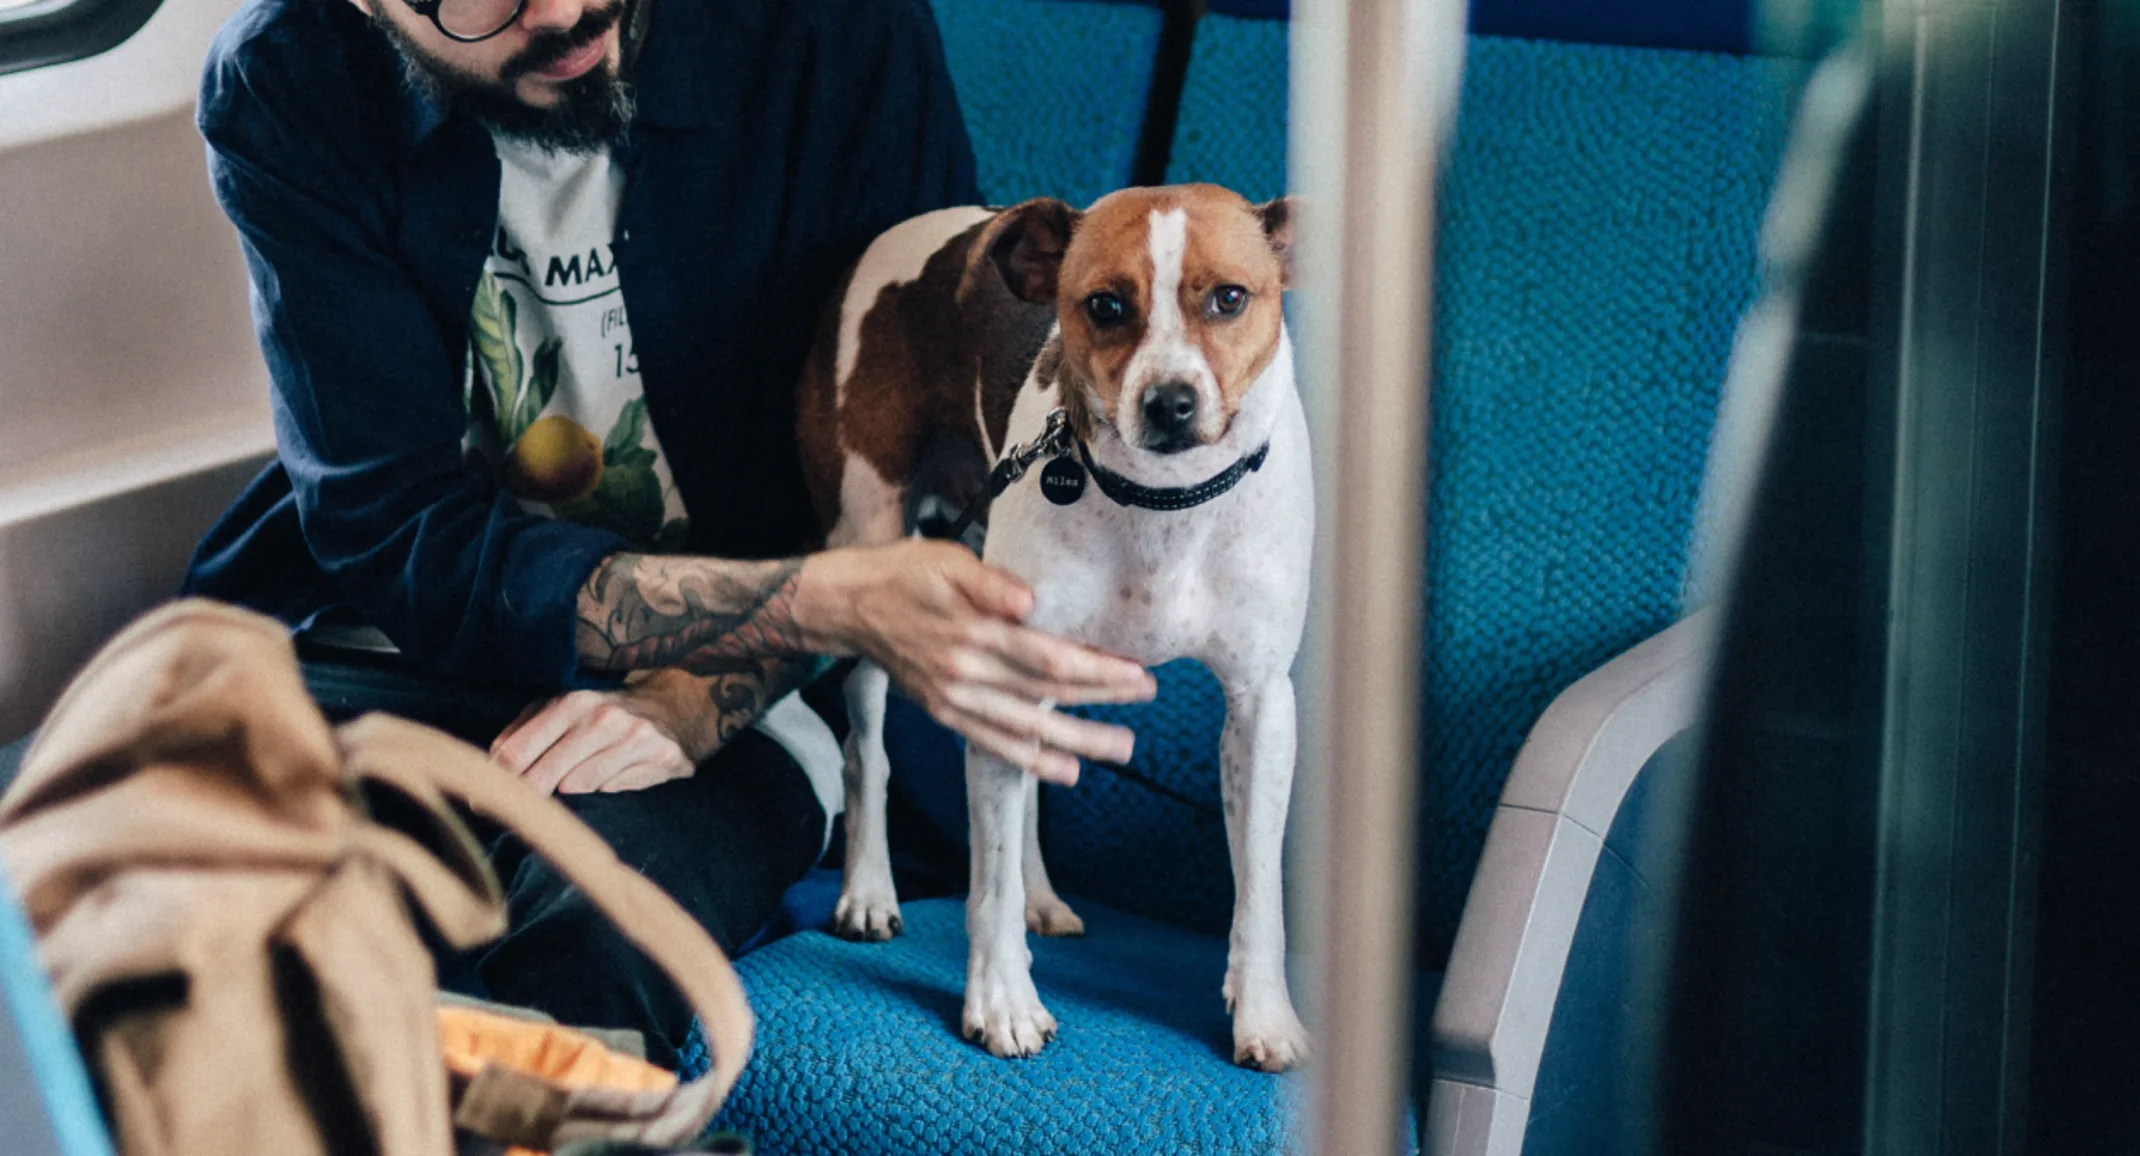 Dog on train 